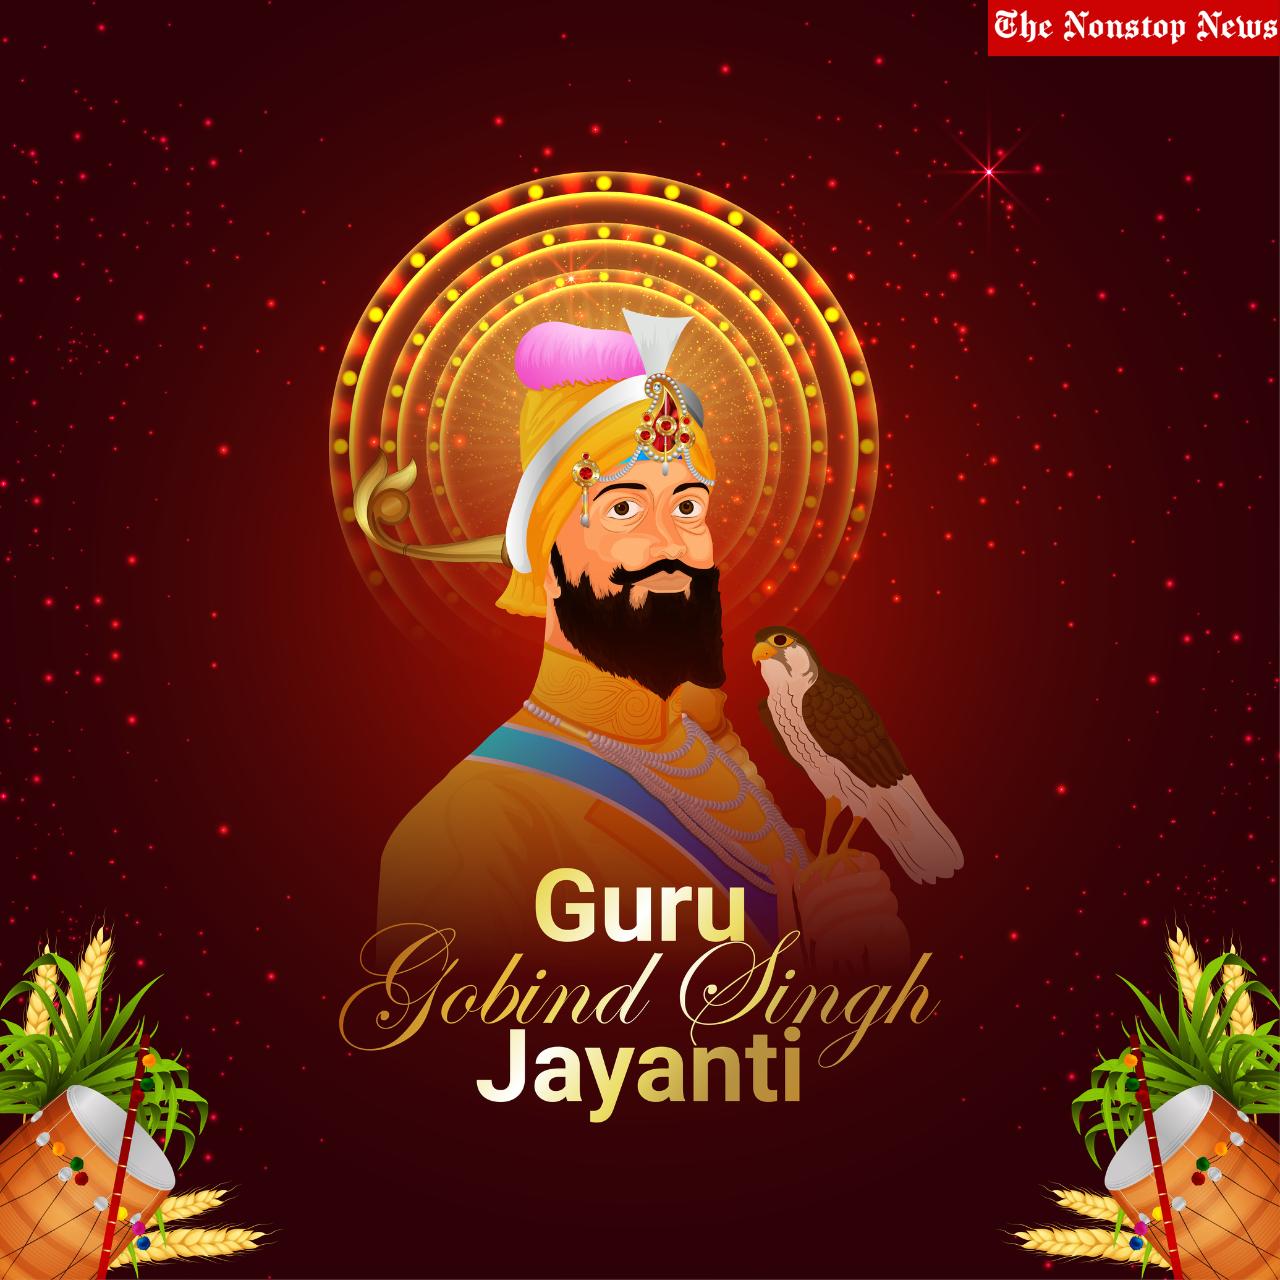 Guru Gobind Singh Jayanti 2022 Quotes, Wishes, Messages, Images, Greetings, Slogans, and Shayari